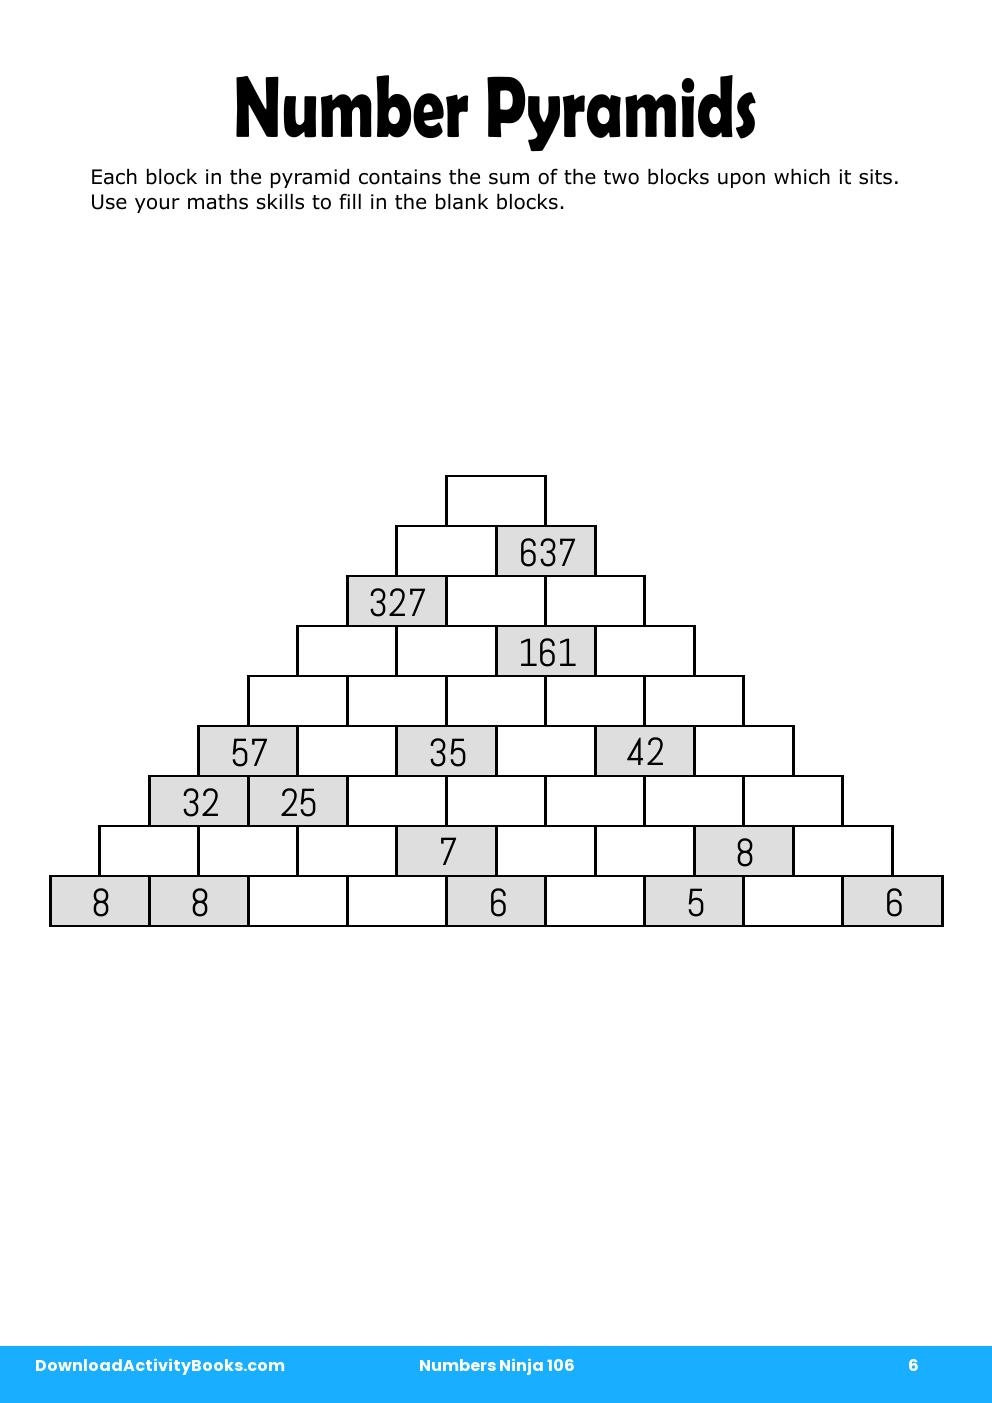 Number Pyramids in Numbers Ninja 106